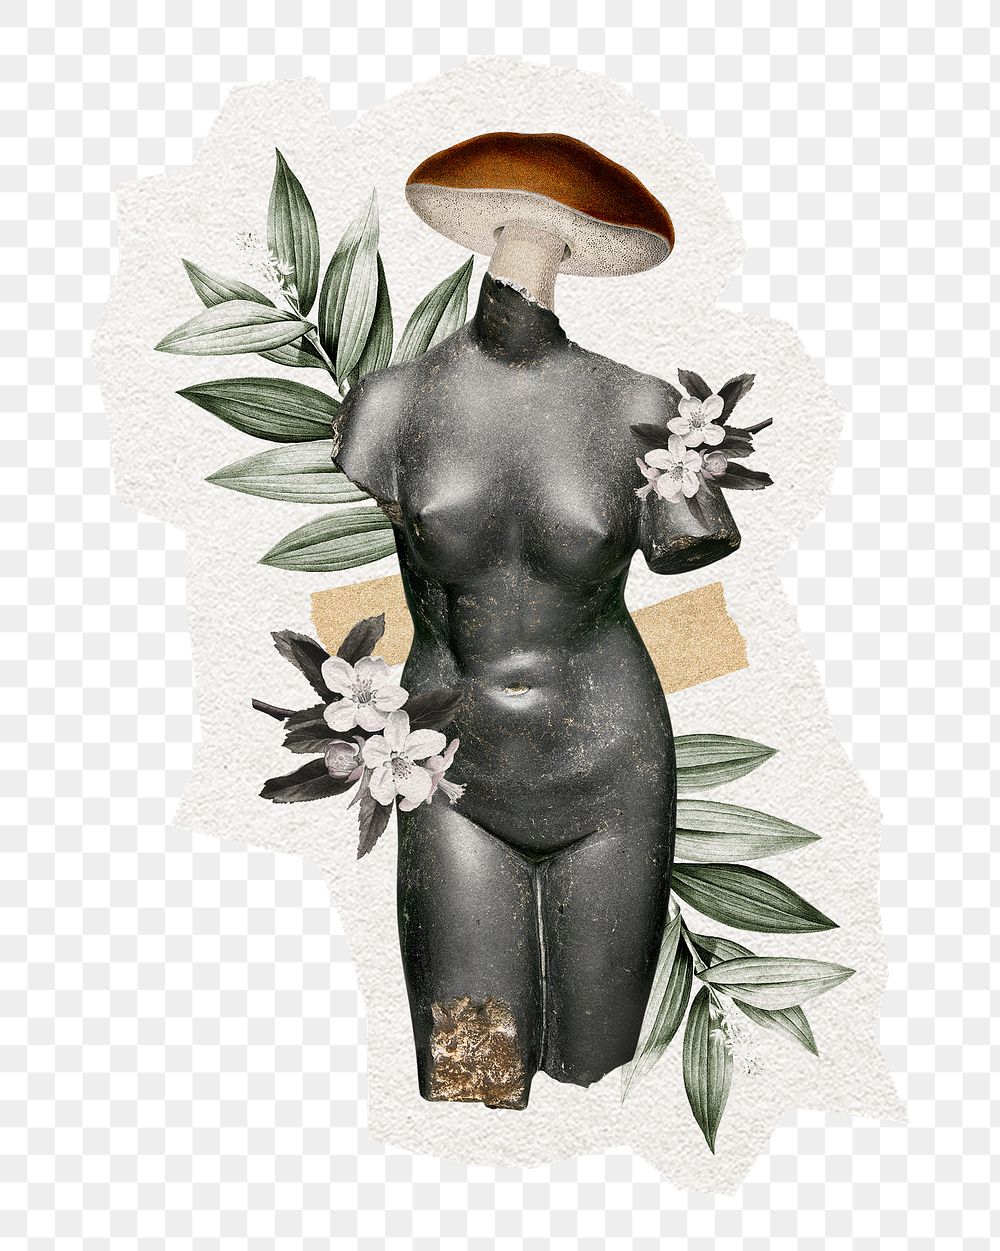 Nude png sculpture sticker, botanical illustration mixed media, digital collage art in transparent background